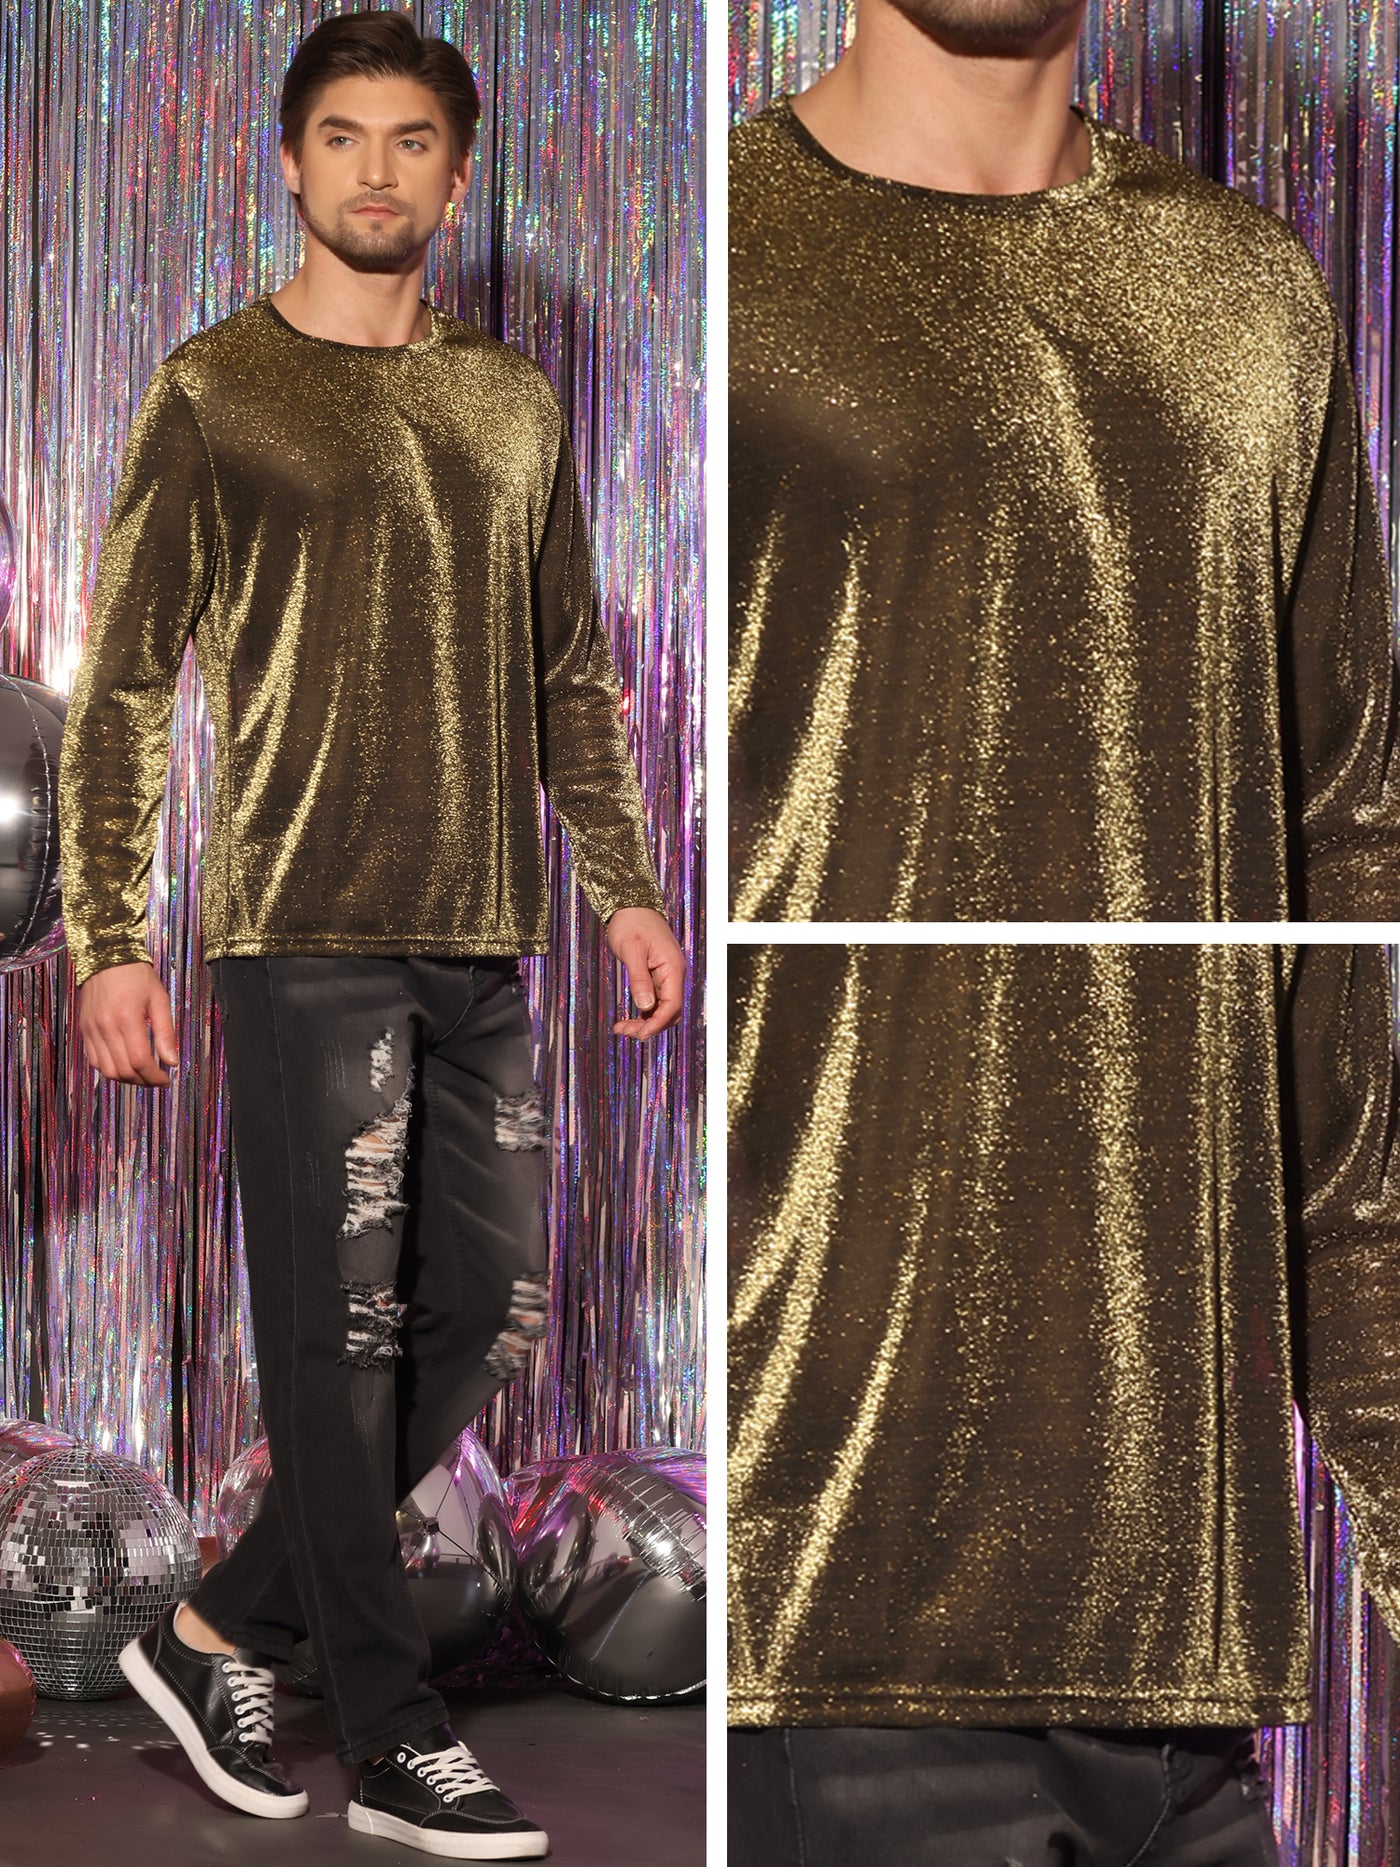 Bublédon Men's Mesh SheerLong Sleeves Club Party Glitter See Through Tee T-Shirt Tops